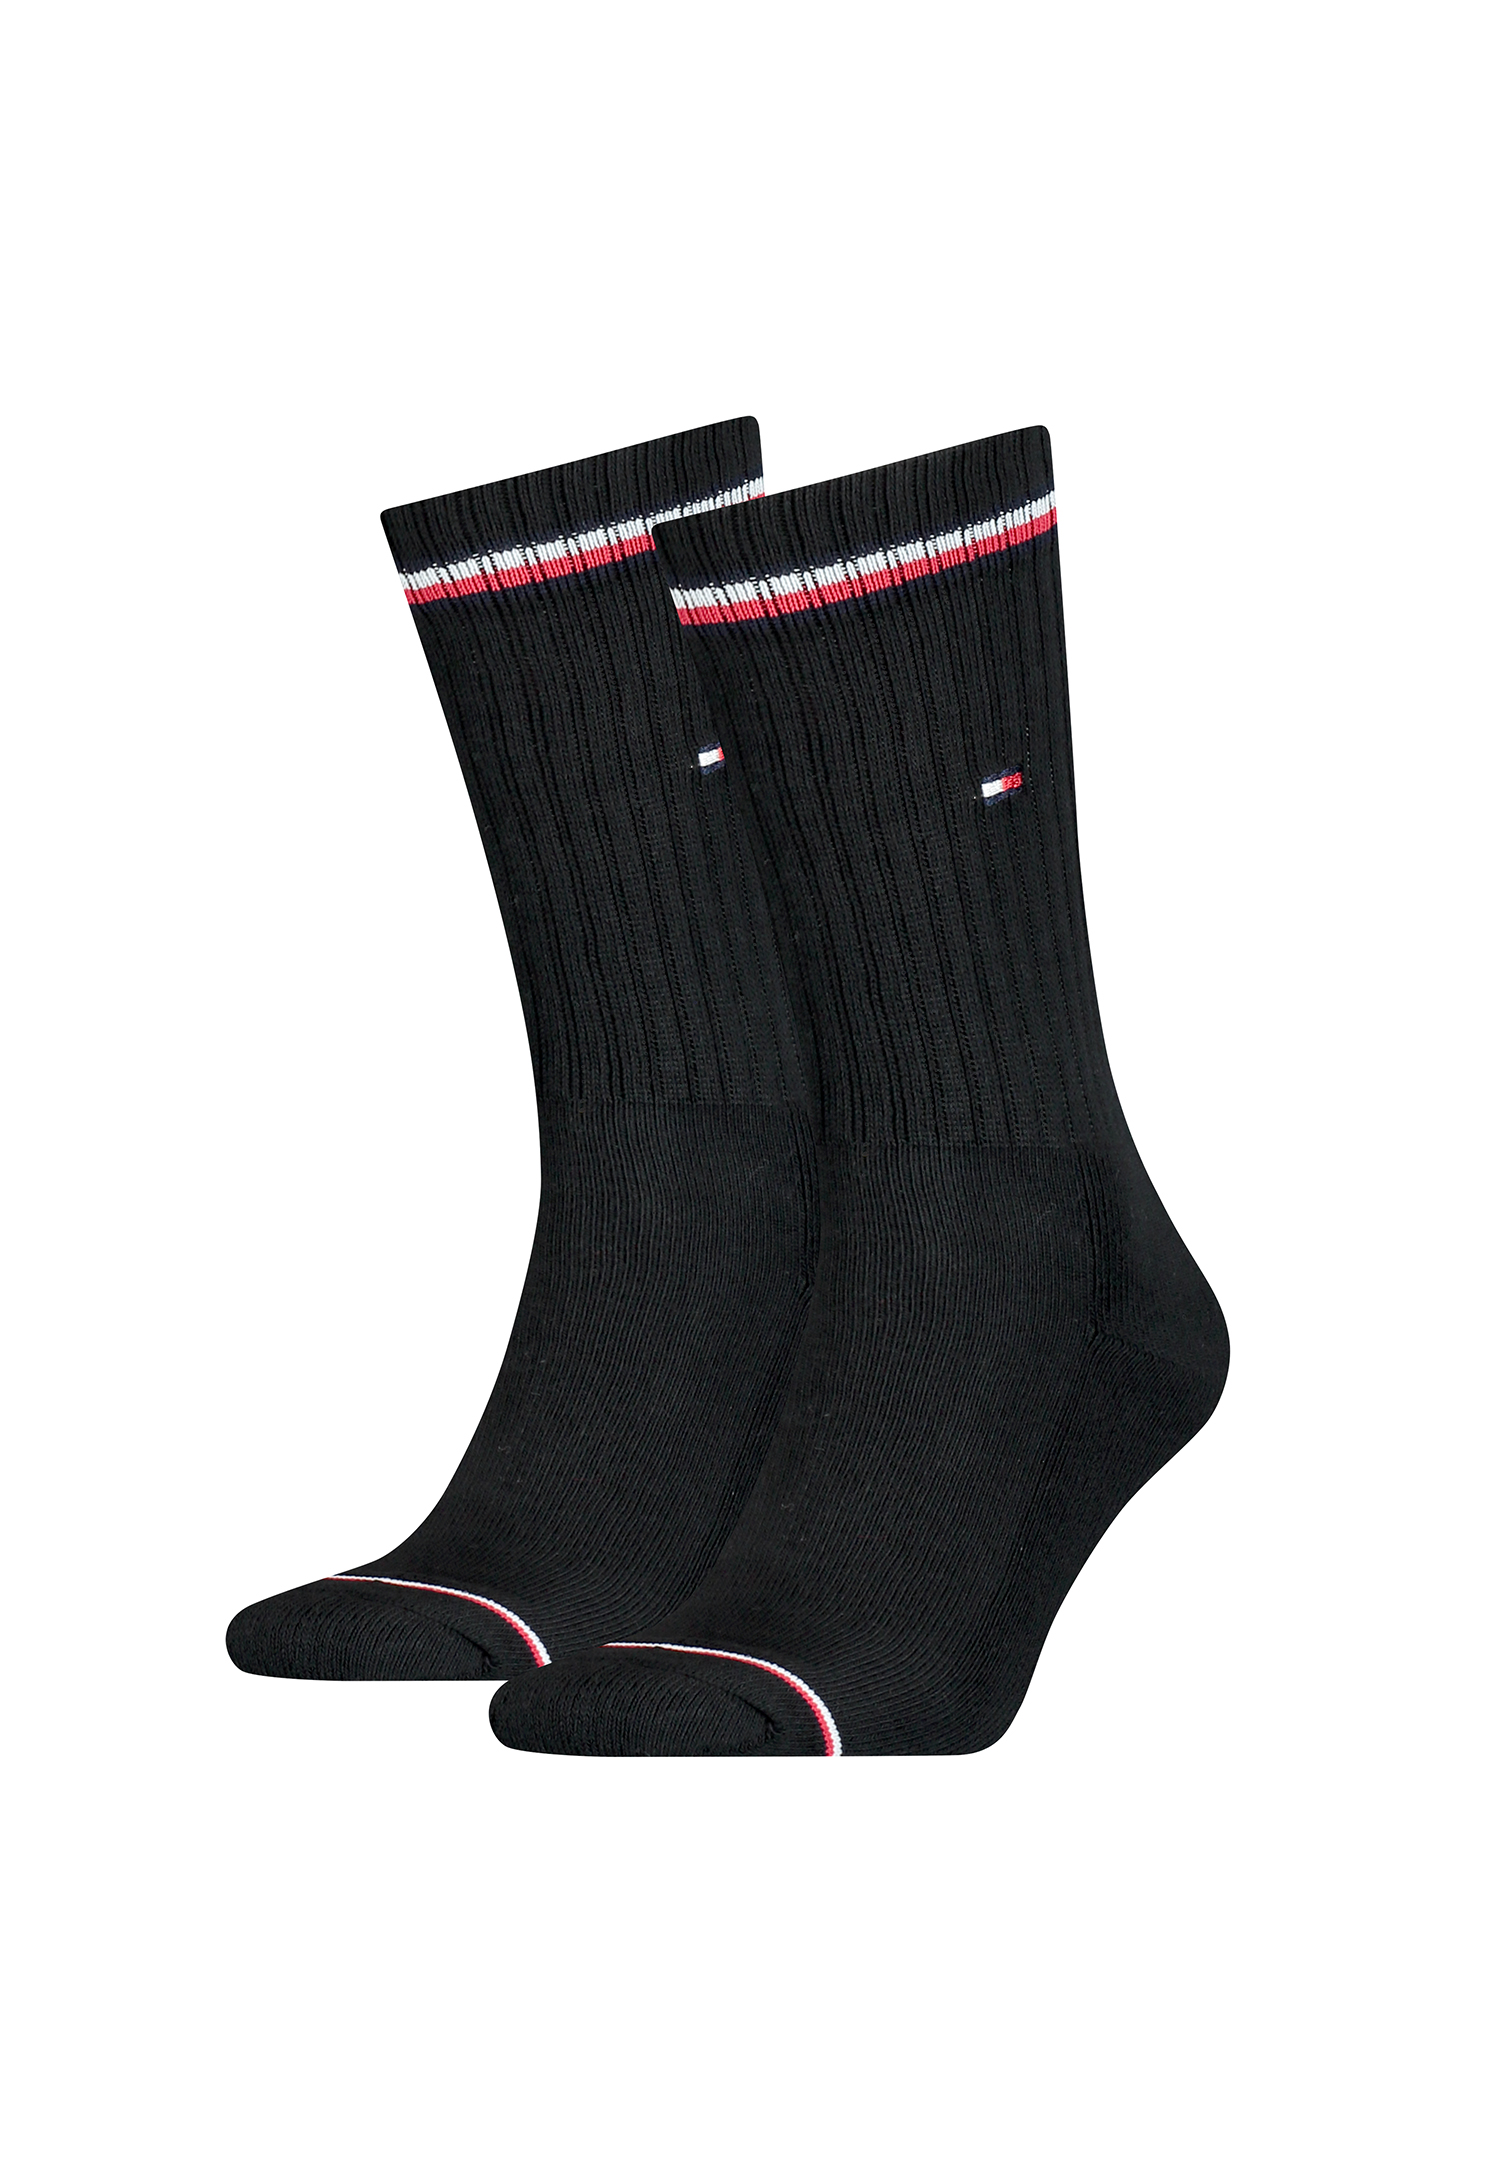 2 Paar TOMMY HILFIGER Herren ICONIC Socken Gr. 39 - 49 Tennis Socken von Tommy Hilfiger